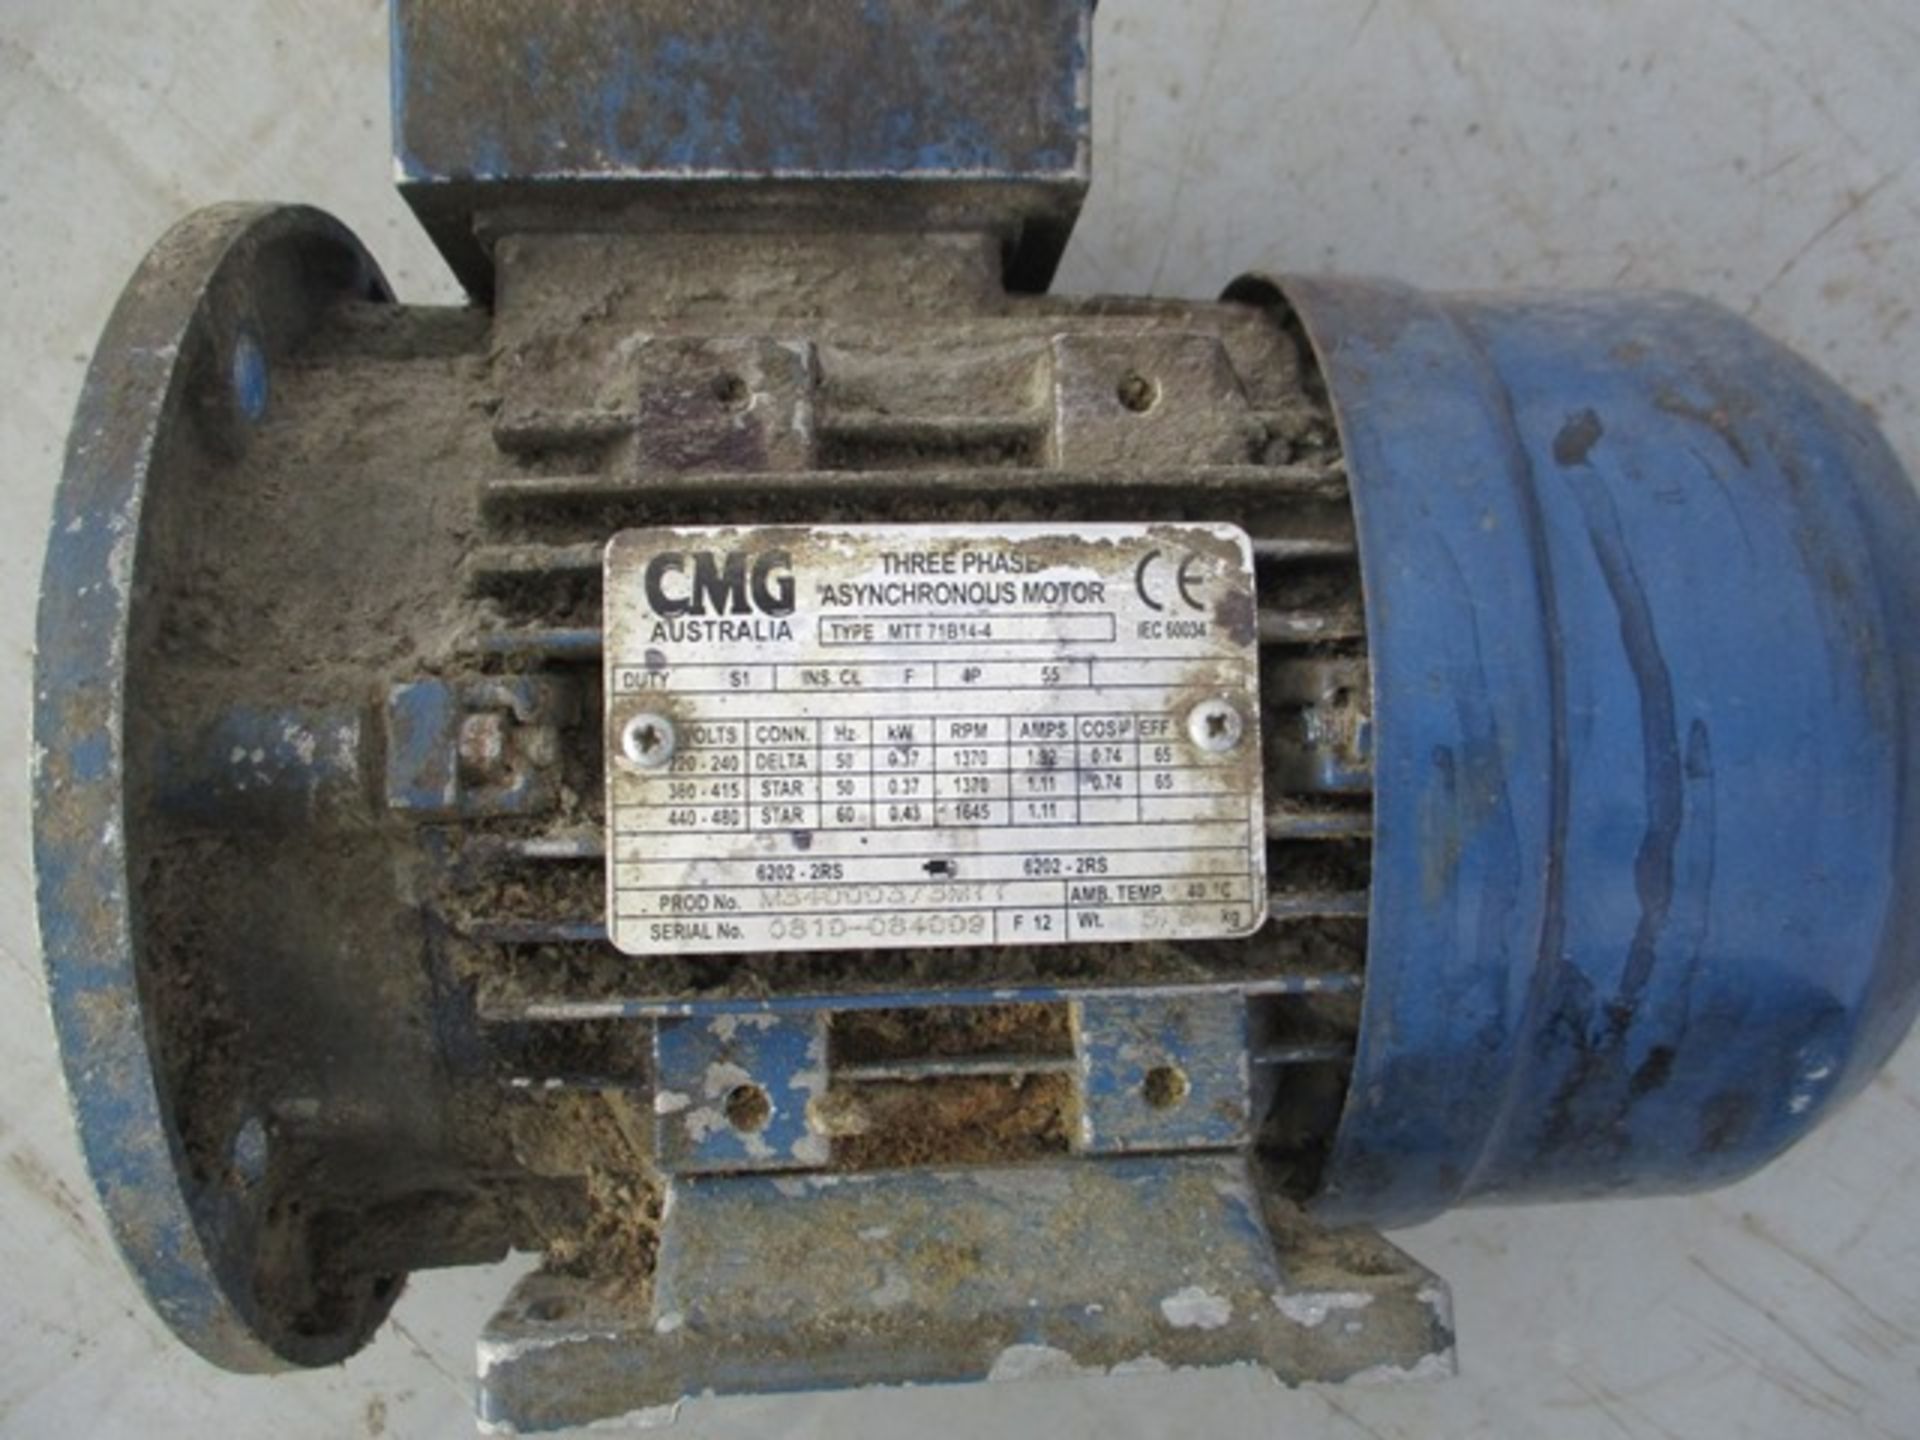 CMG MTT 71B14-4 Motor - Image 2 of 2